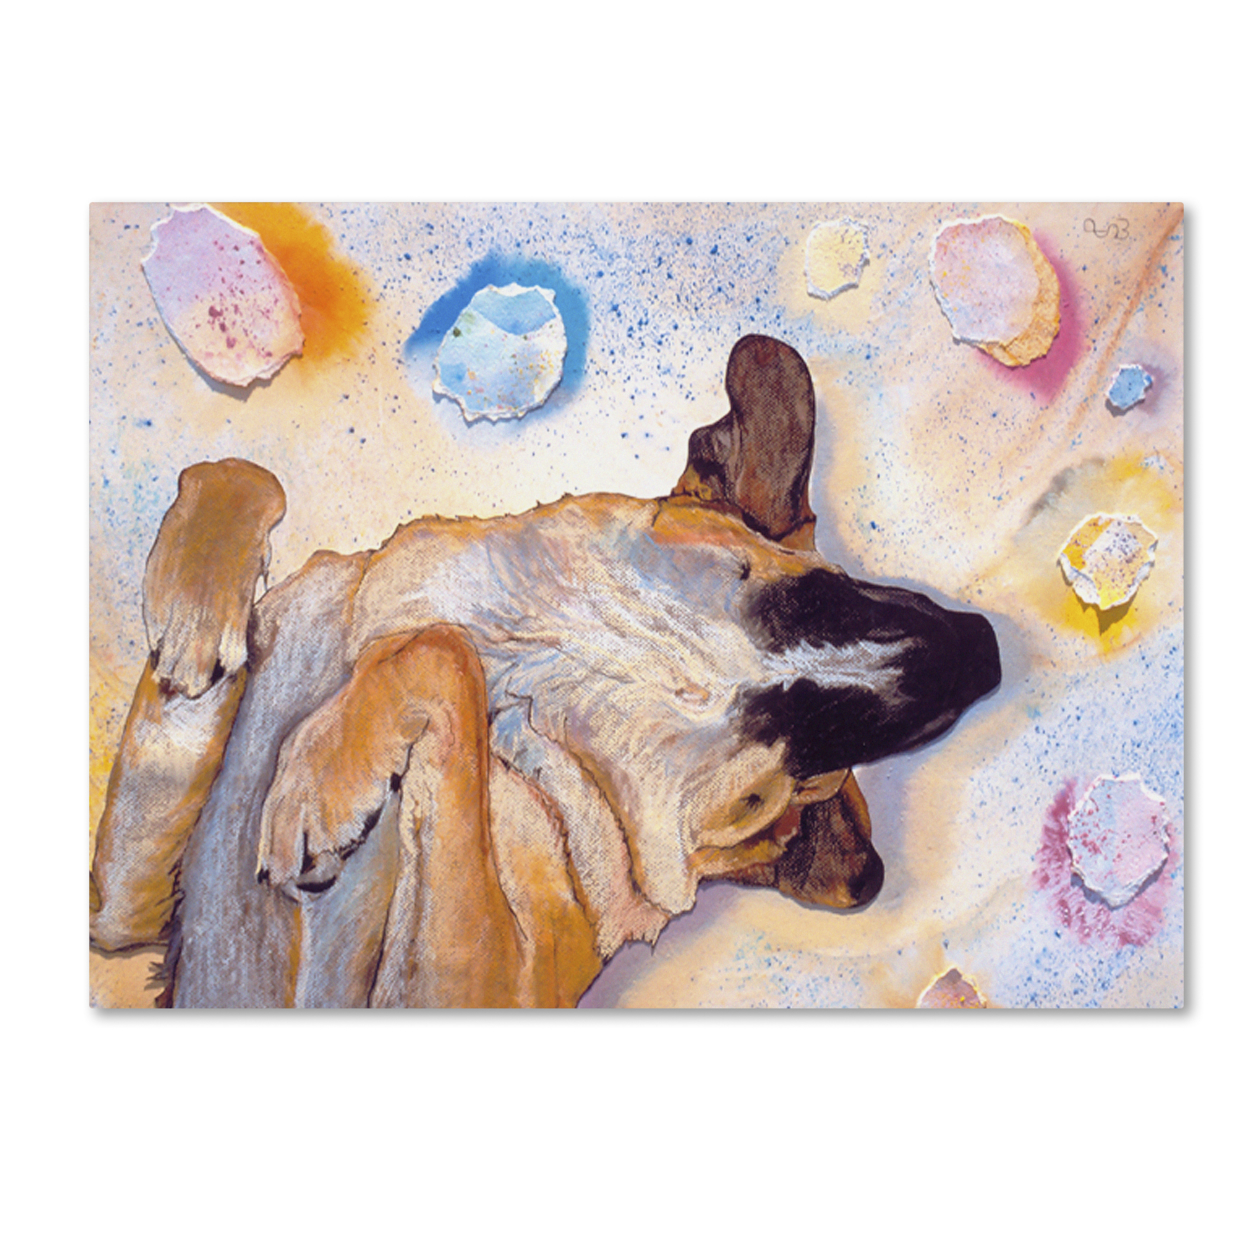 Pat Saunders-White 'Dog Dreams' Canvas Art 18 X 24